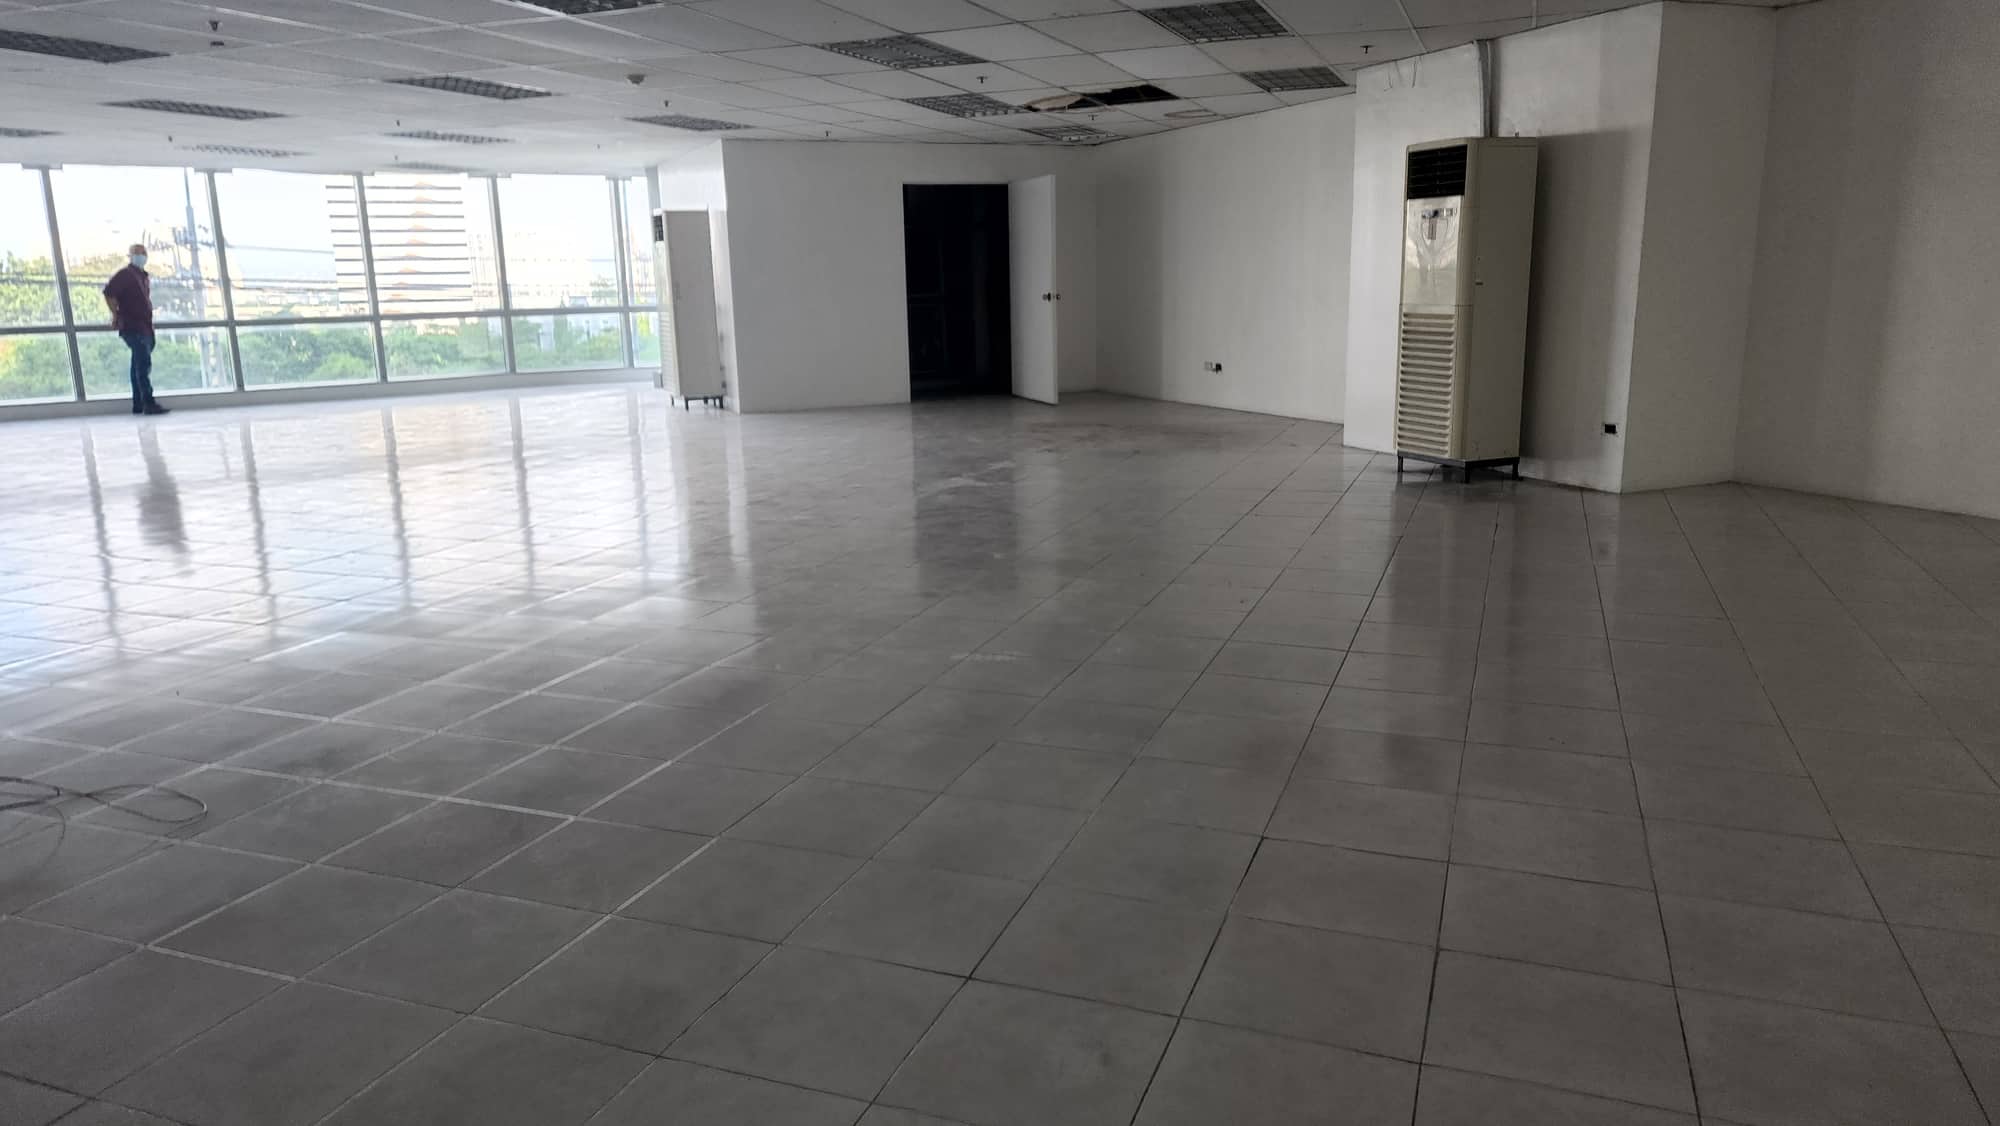 PEZA BPO Office Space Rent Lease Ortigas Center 256 sqm